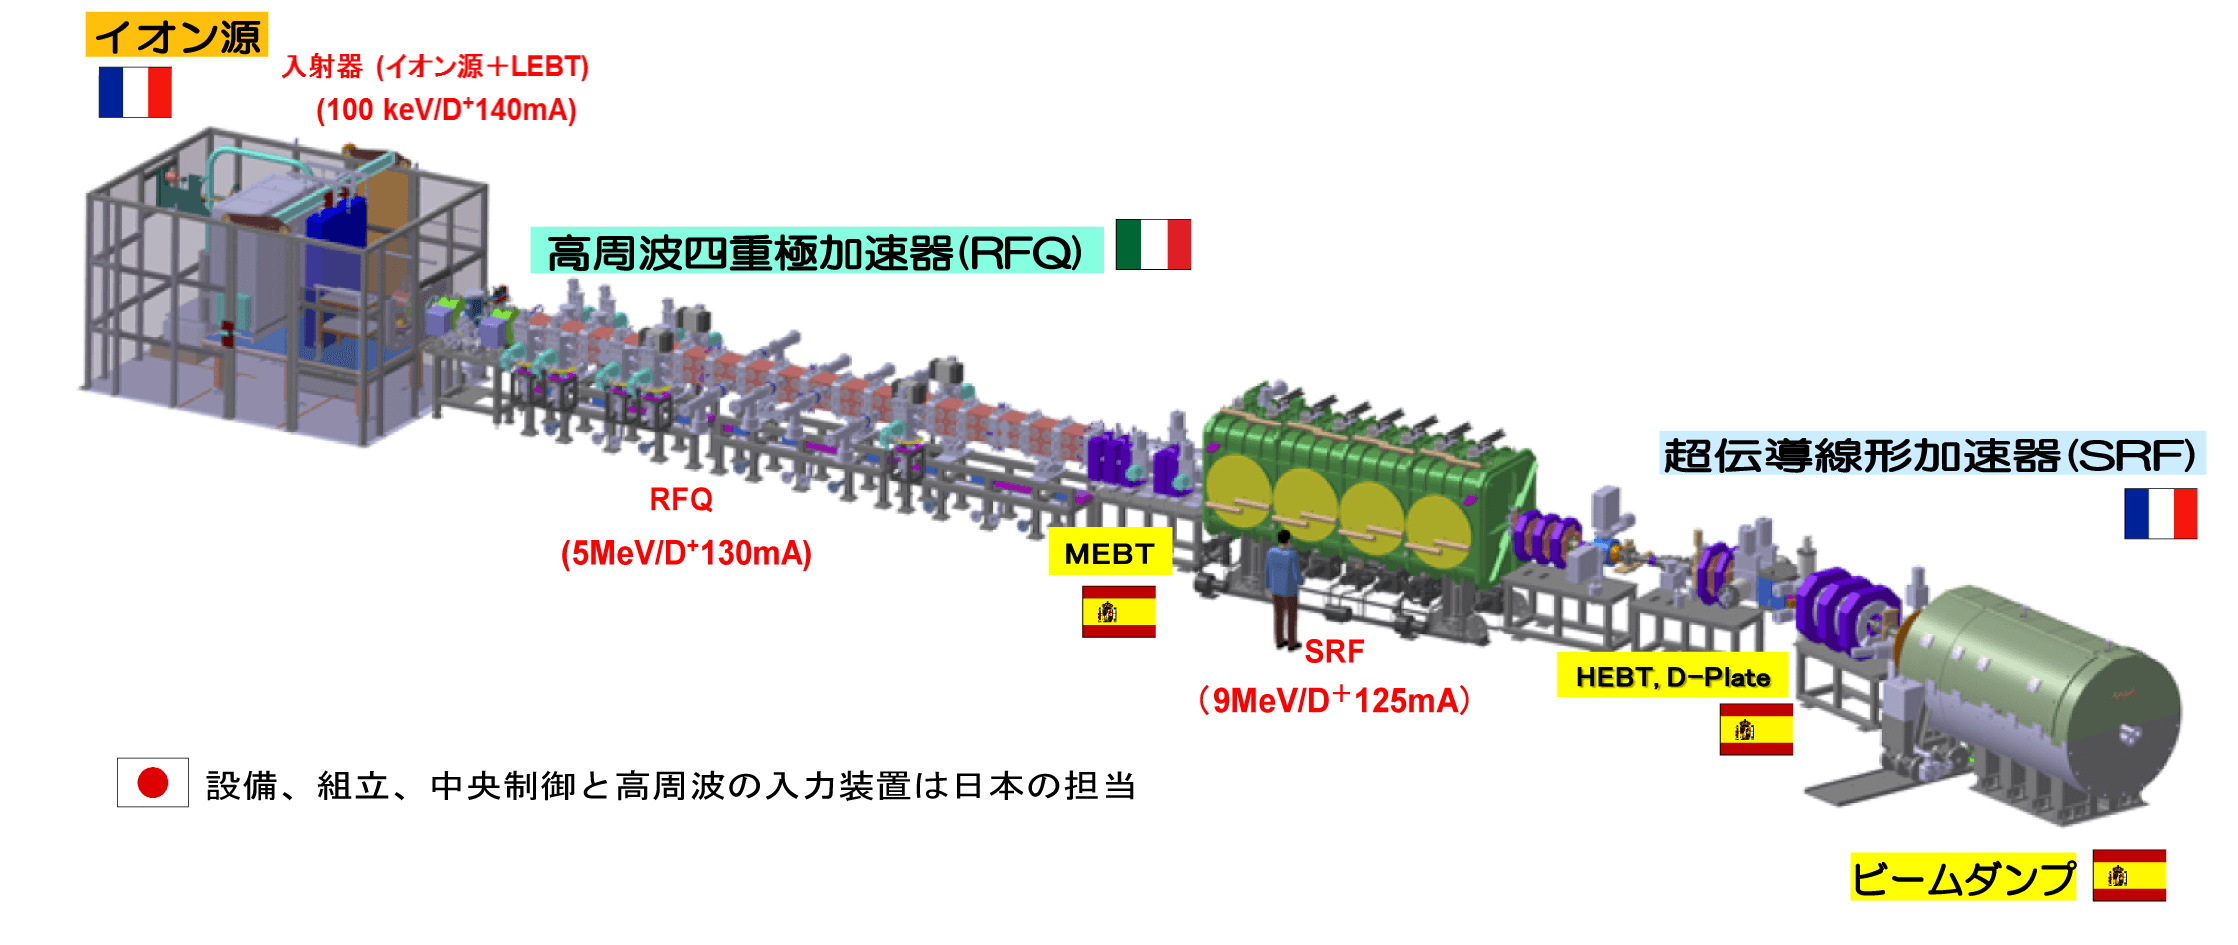 The IFMIF prototype accelerator developed in Rokkashoの画像1